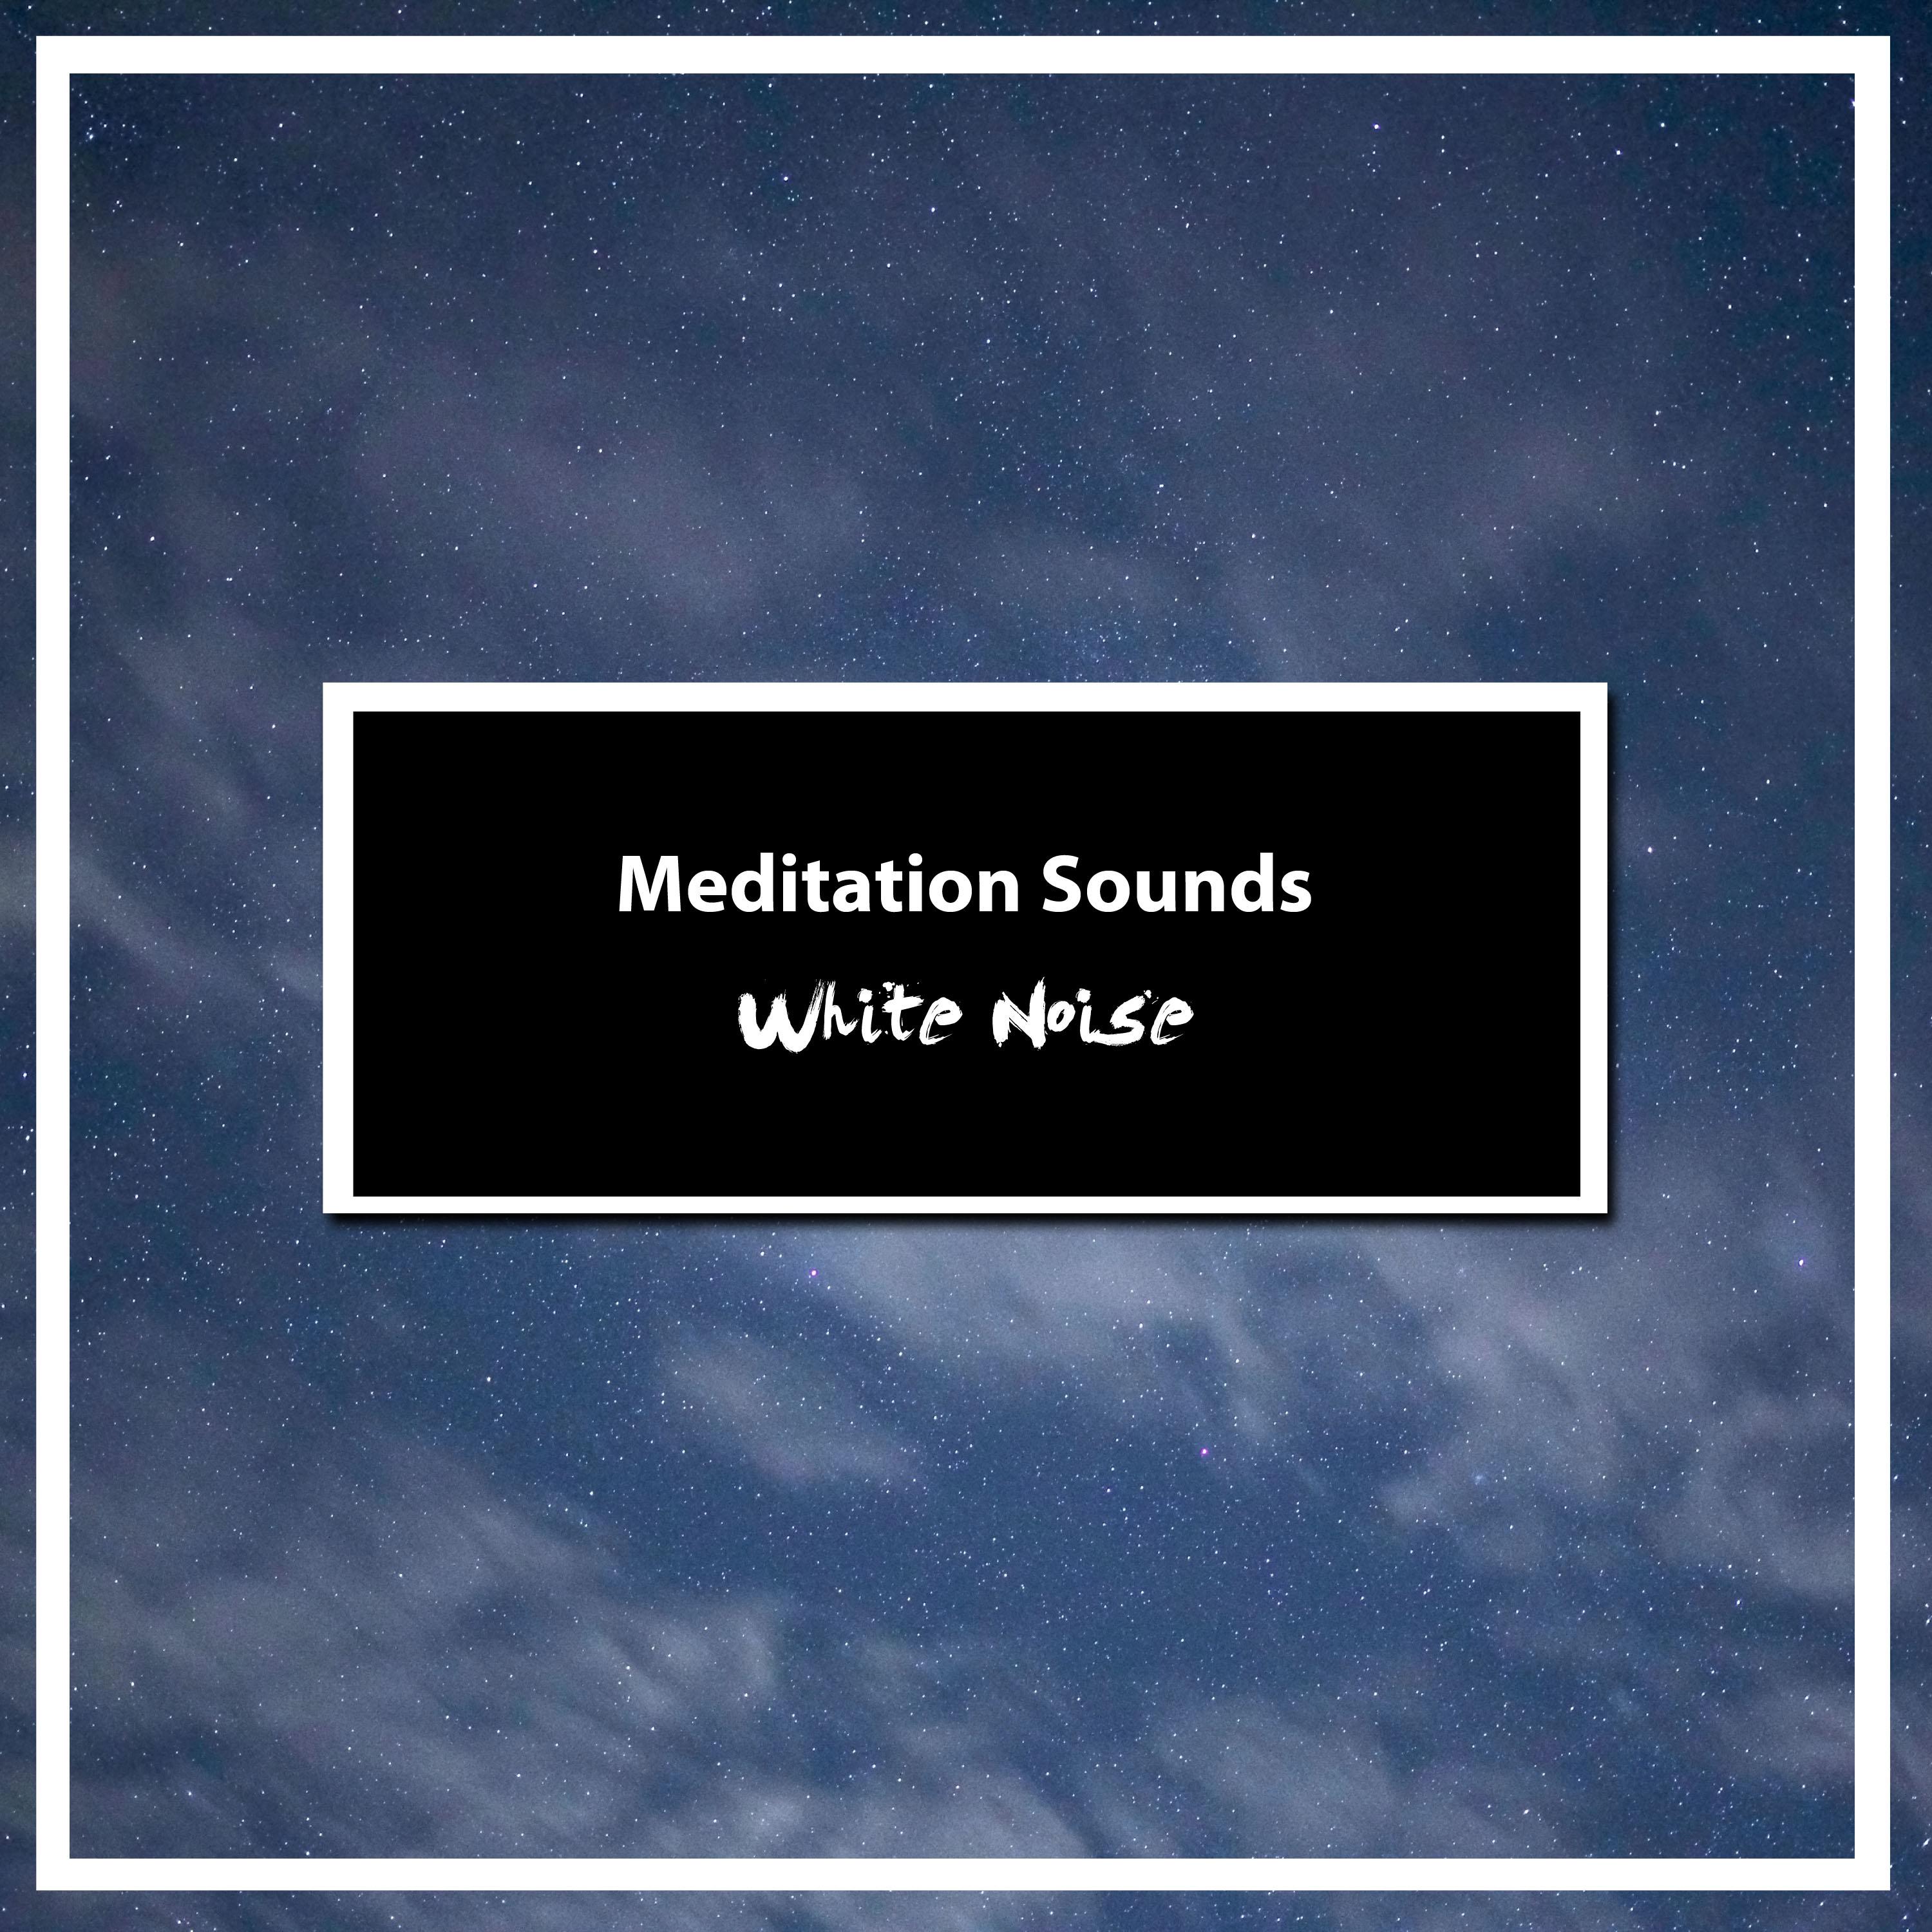 10 Meditation Sounds - White Noise Compilation